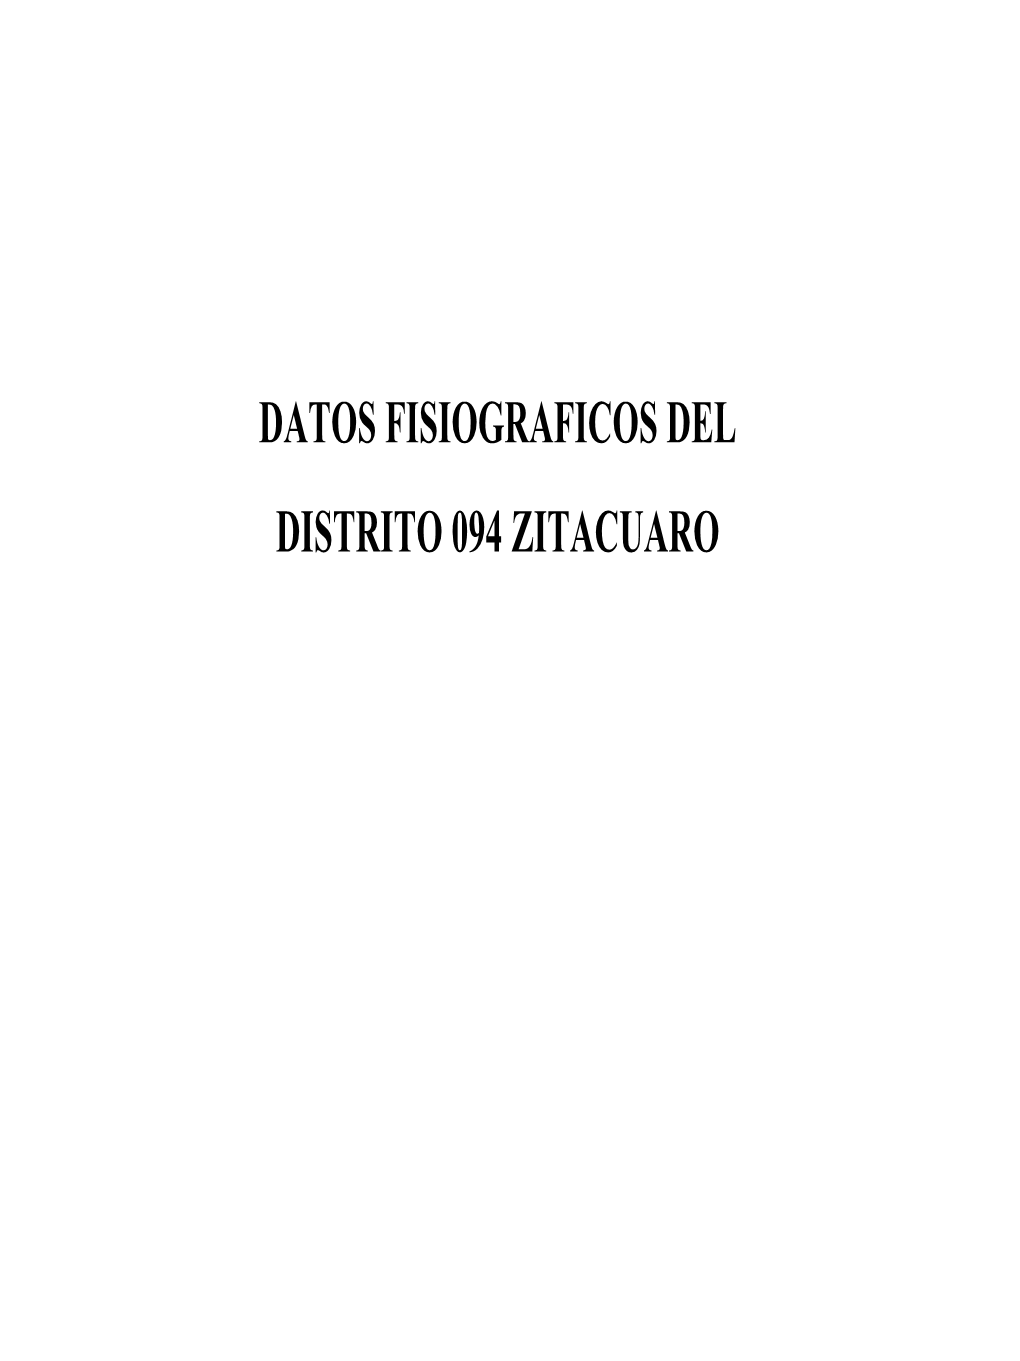 Ddr Zitacuaro